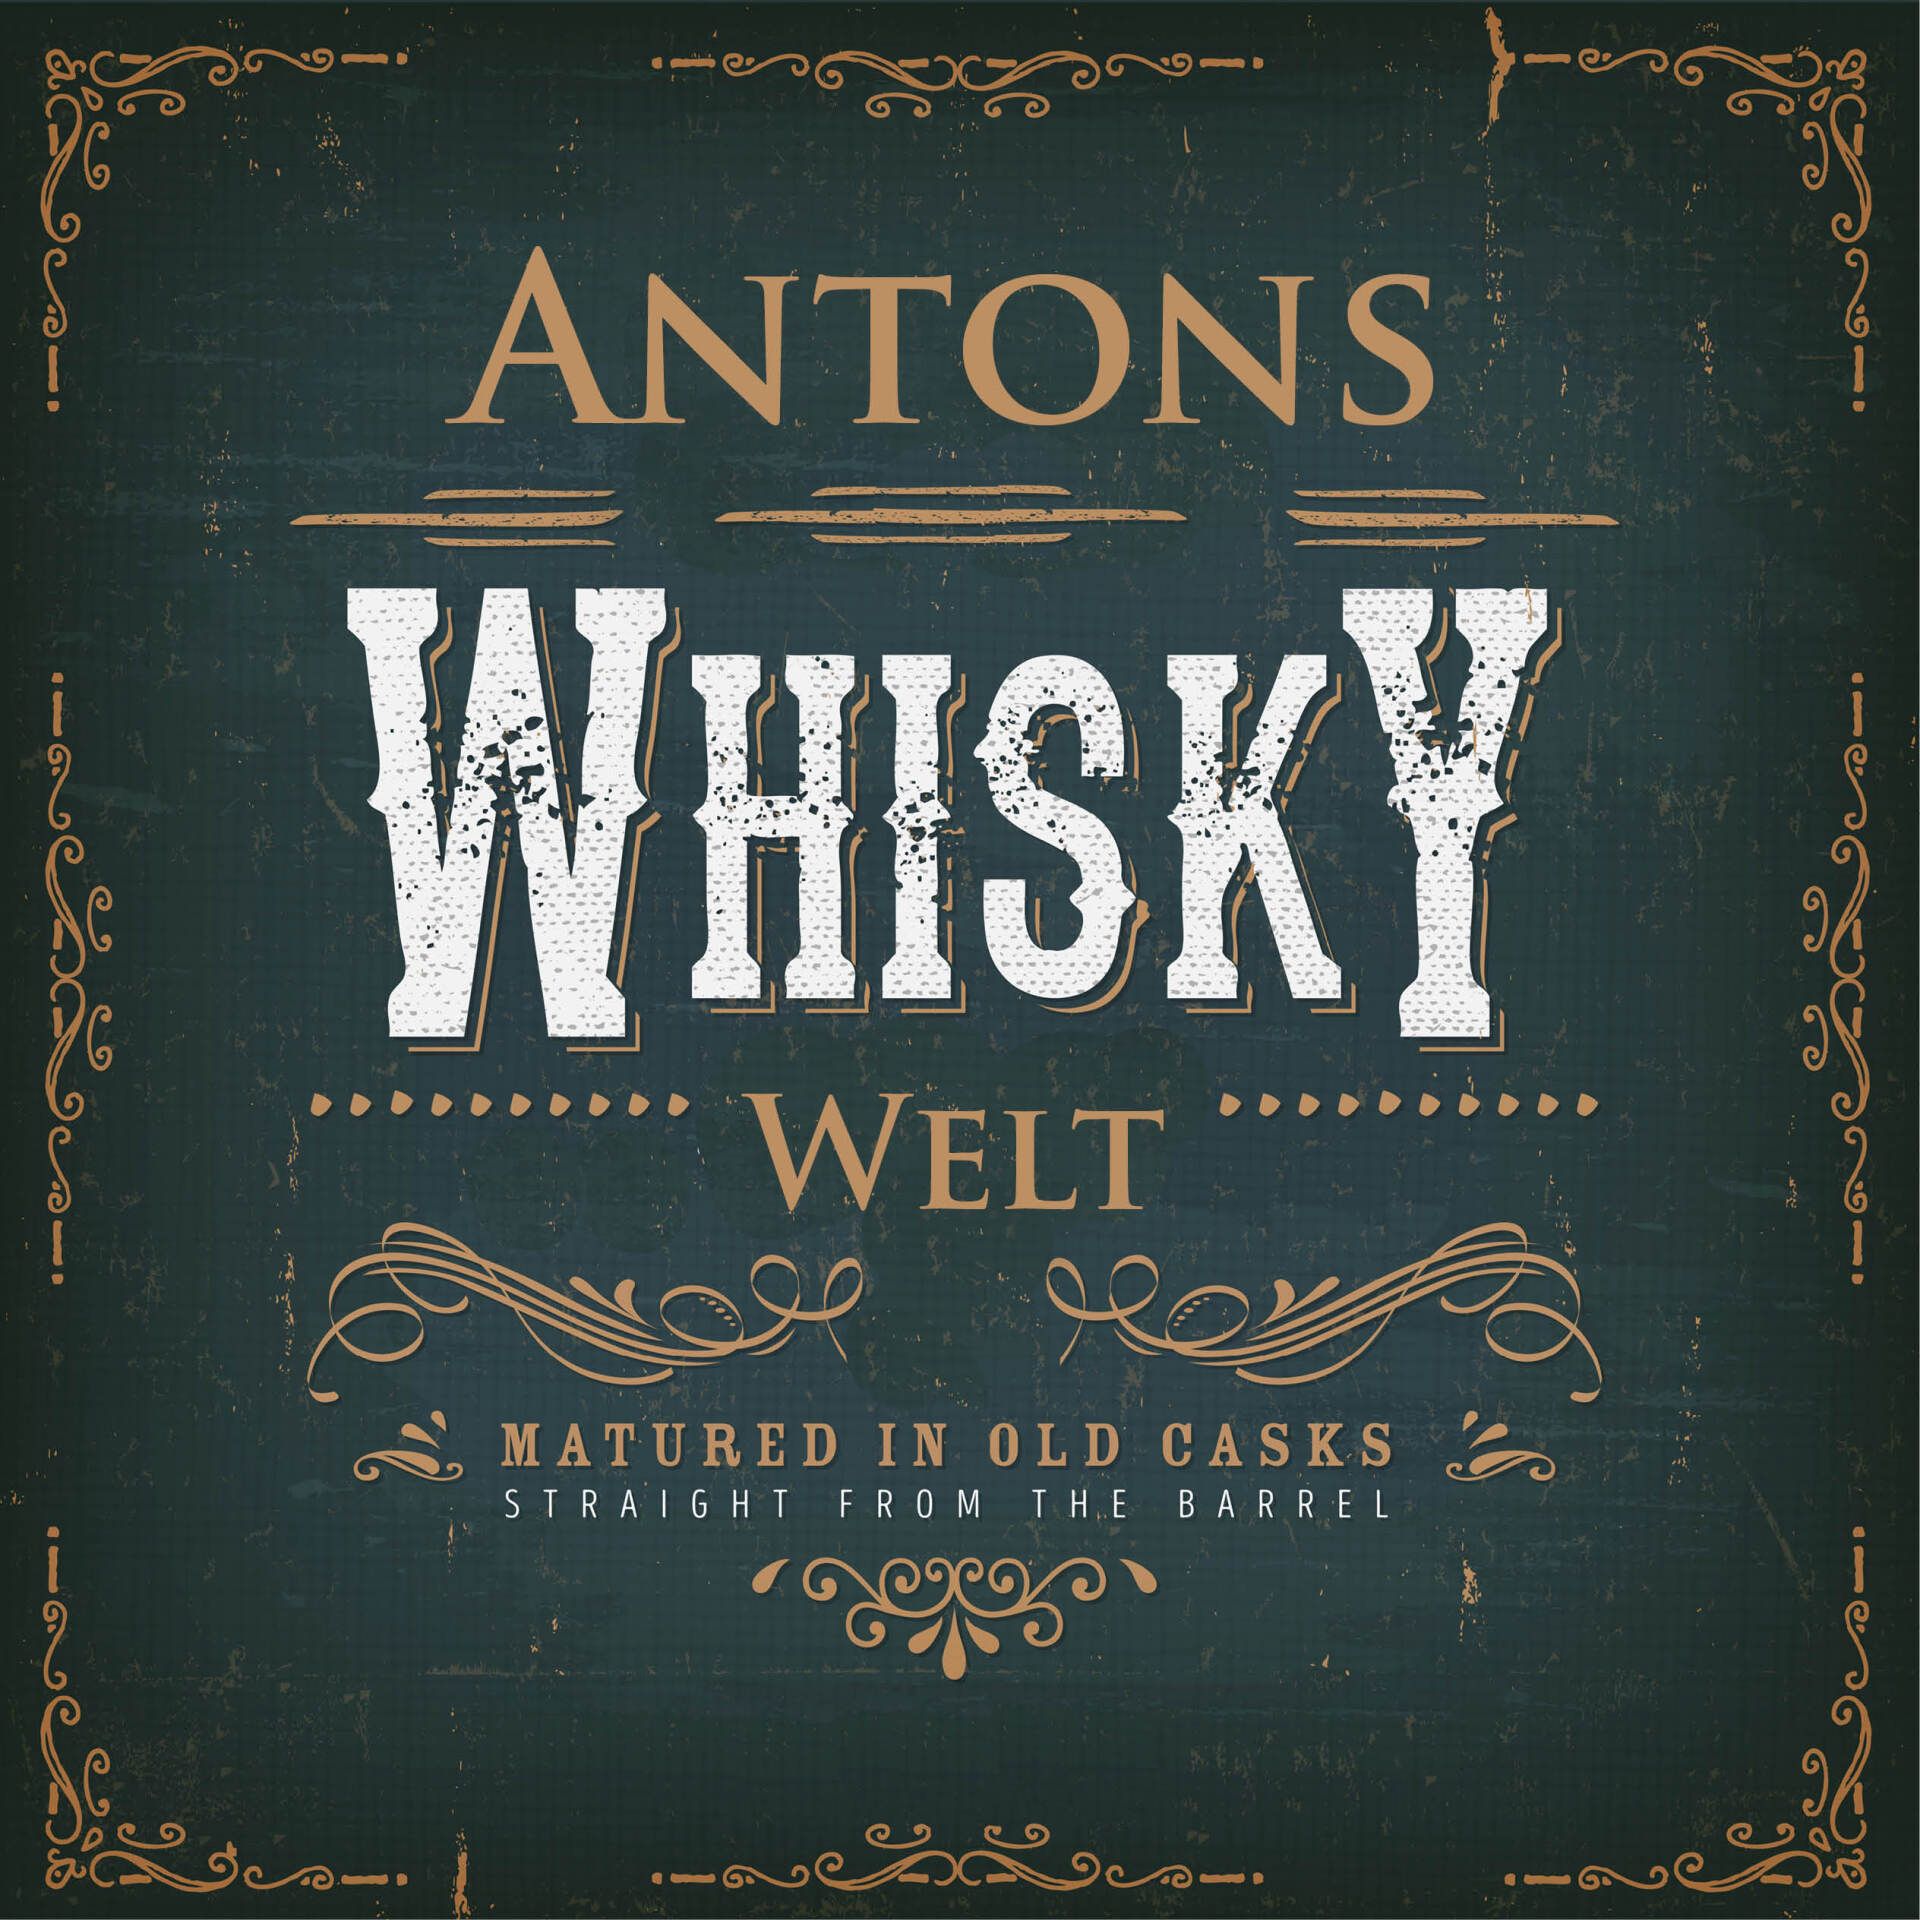 (c) Antons-whiskywelt.de